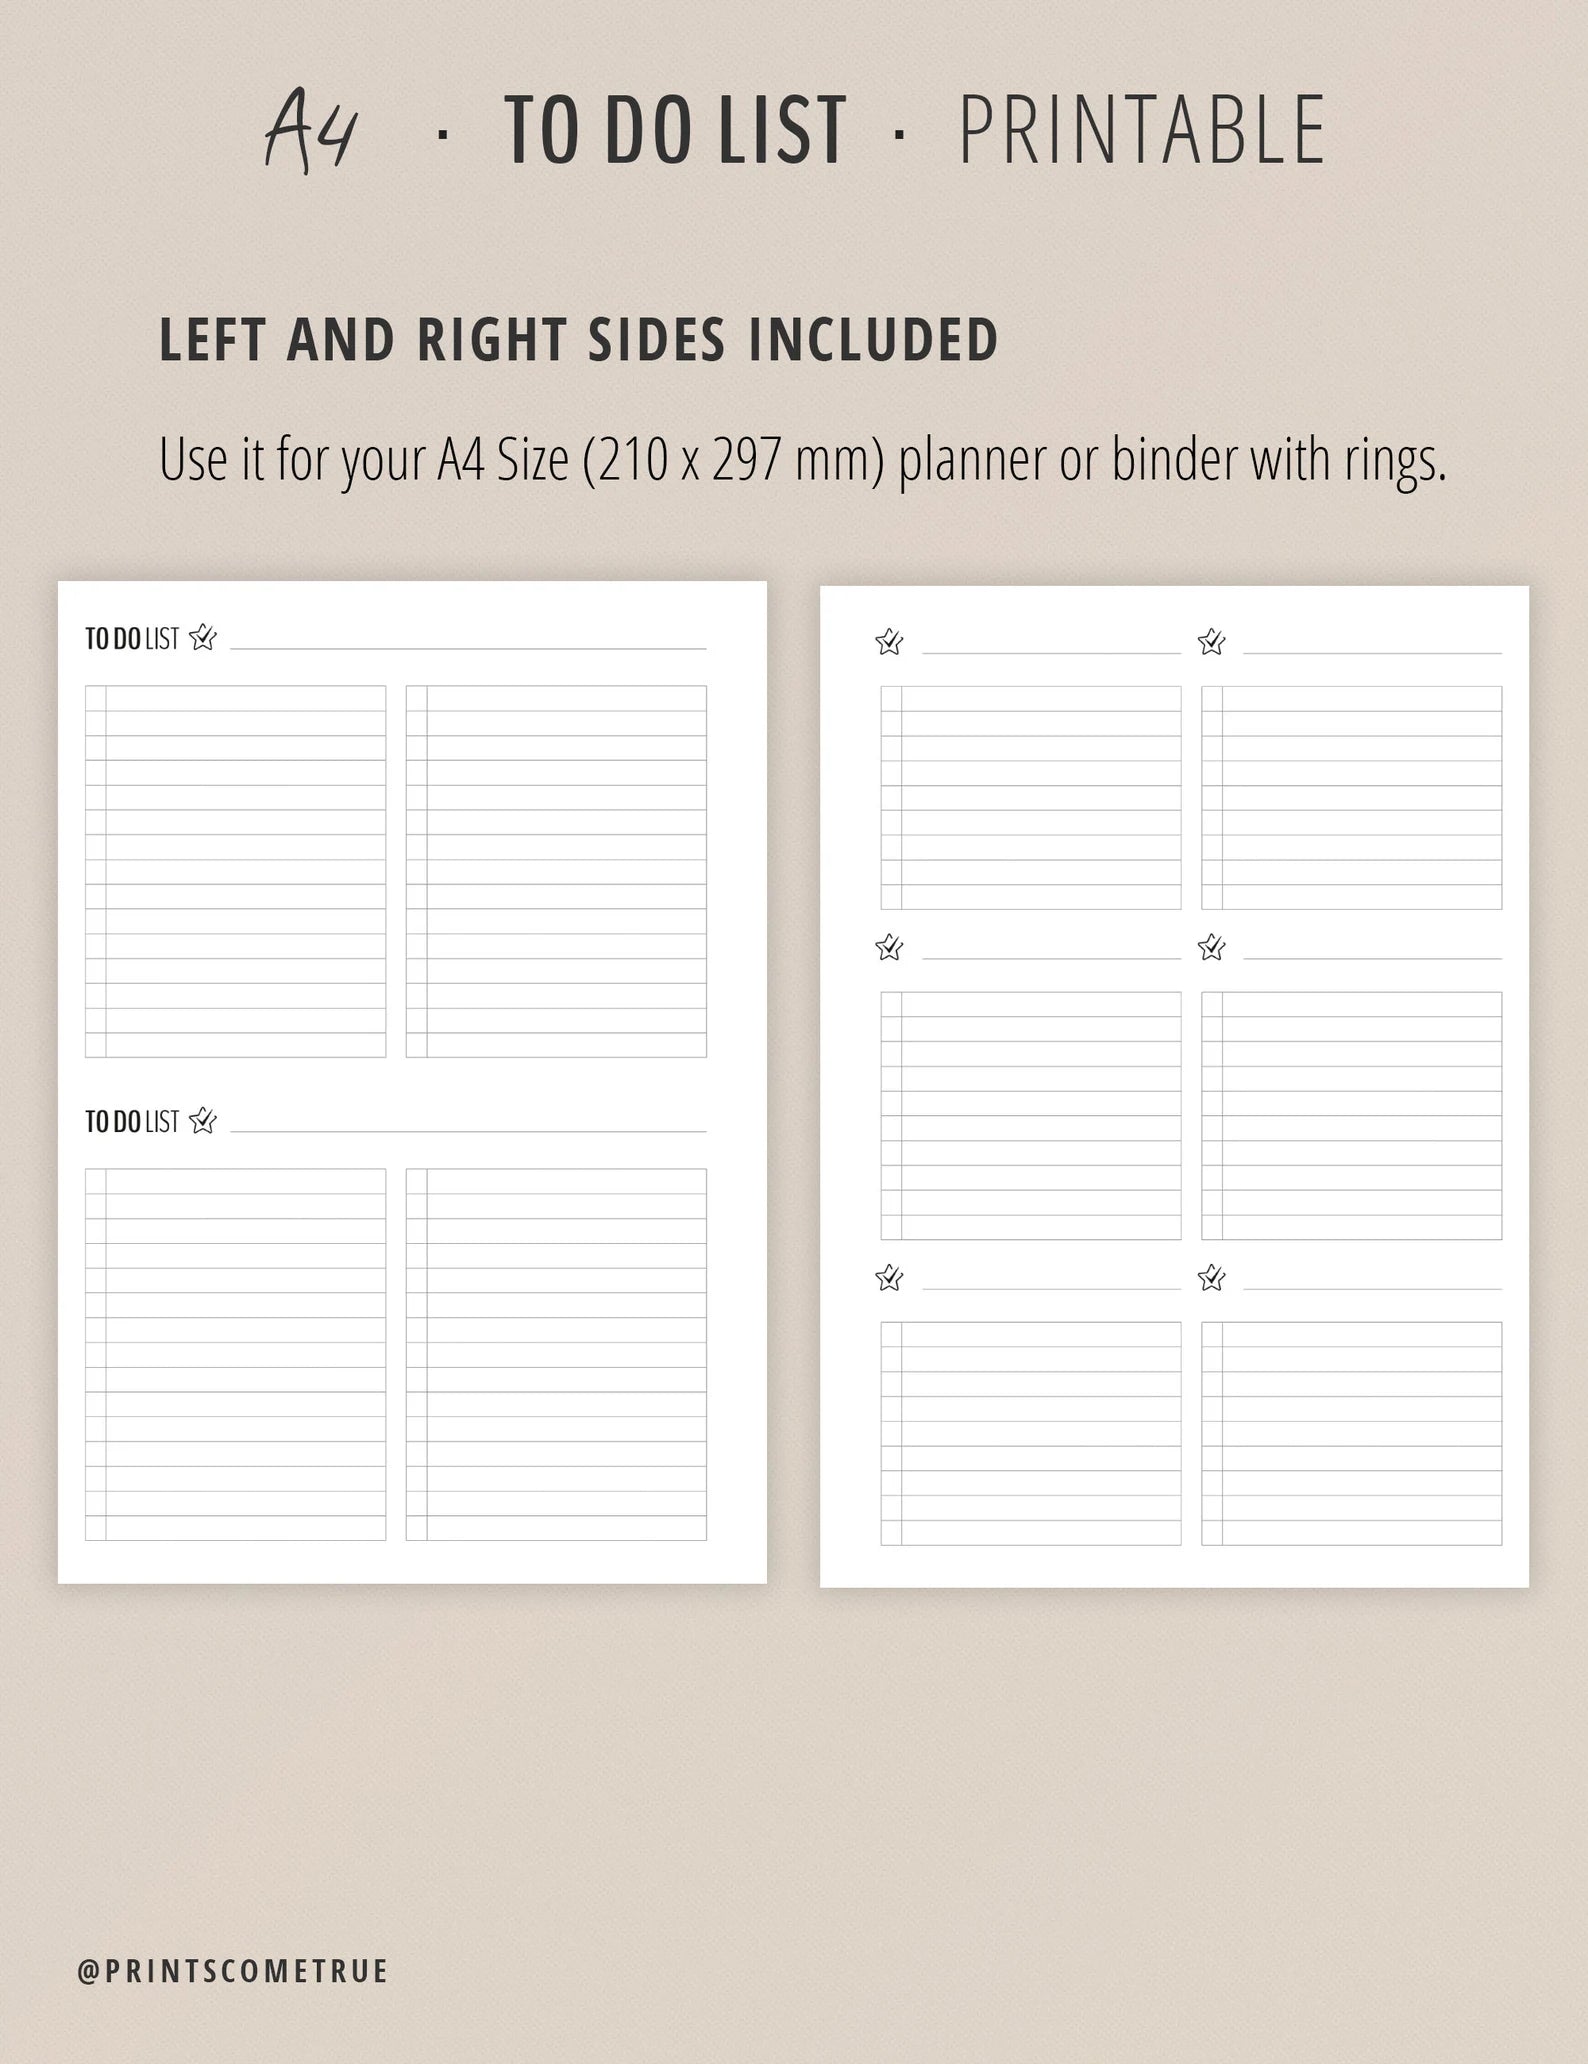 To Do List - Printable Planner A4 - 4